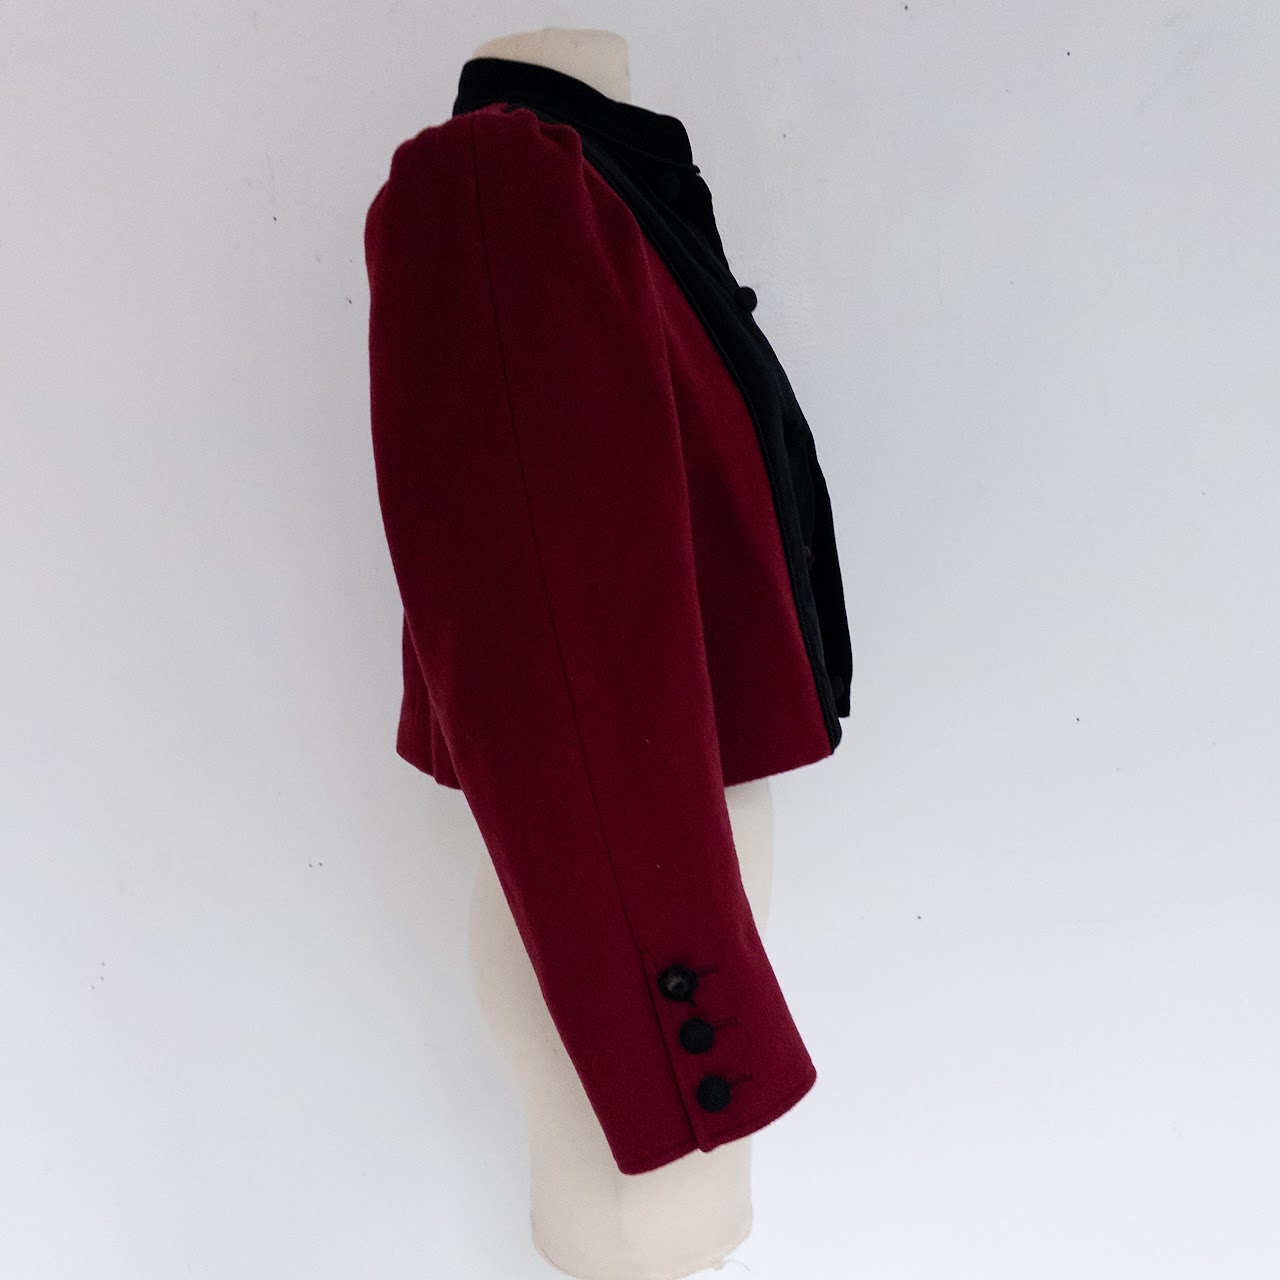 Saint Laurent Wool Regency Style Jacket